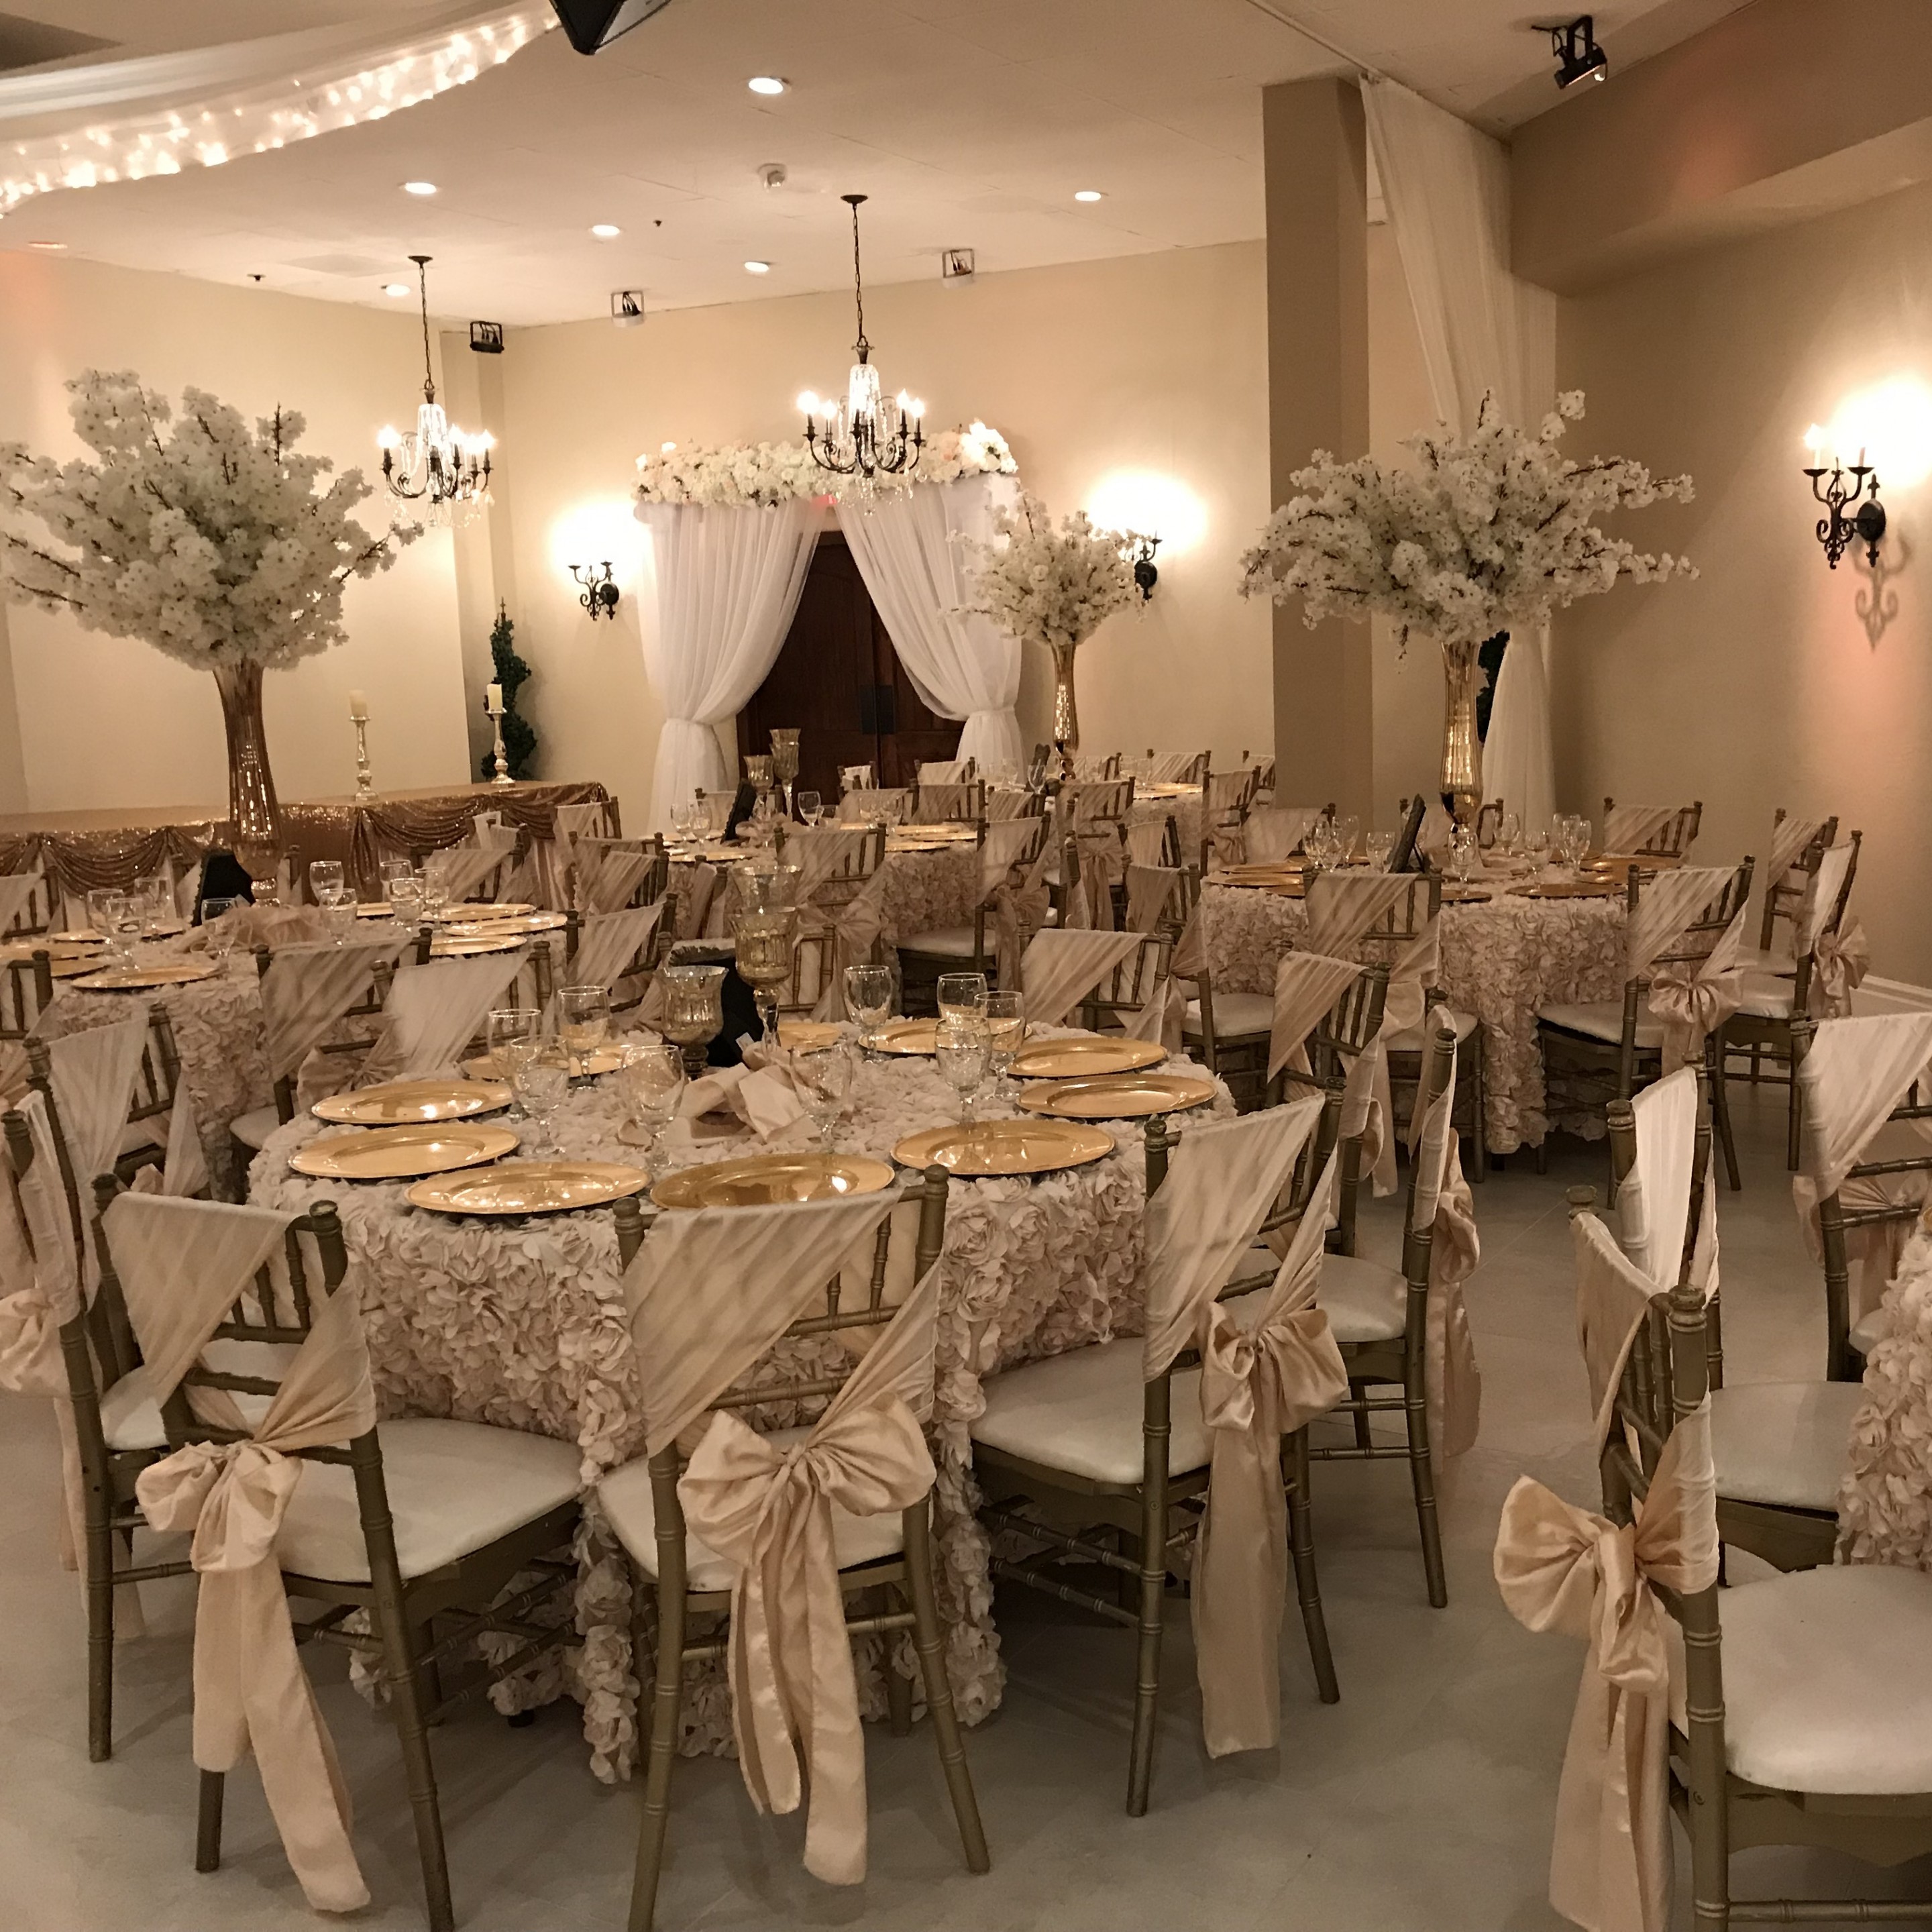 Villa Tuscana Reception Hall event showing wedding reception table decor